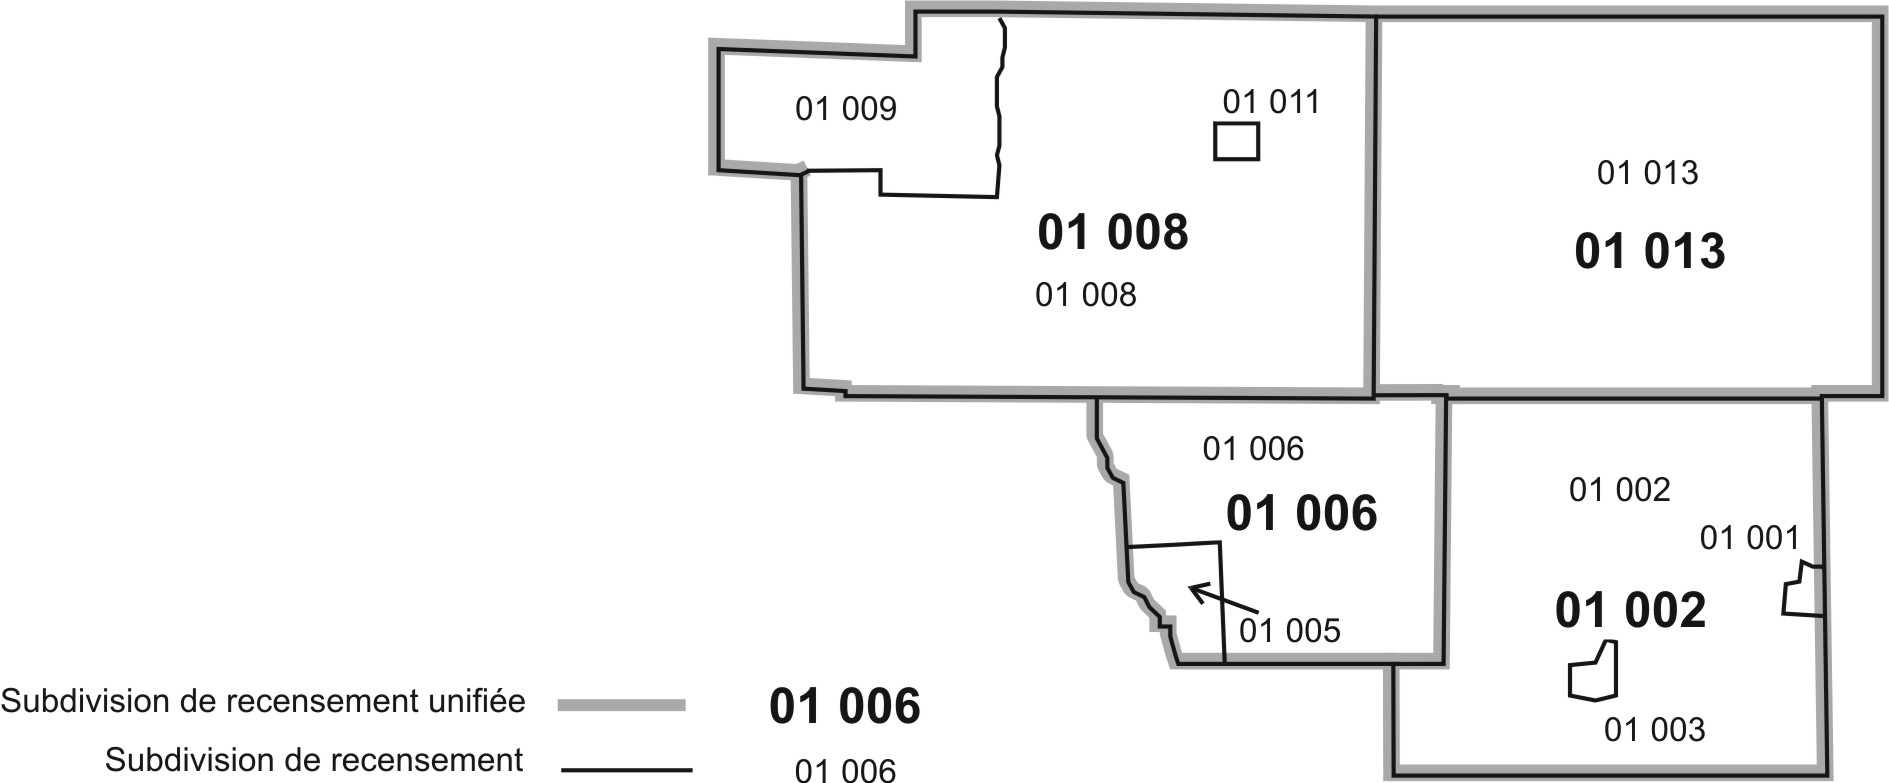 Figure 5 Exemple de subdivisions de recensement unifiées (SRU) et de subdivisions de recensement (SDR)